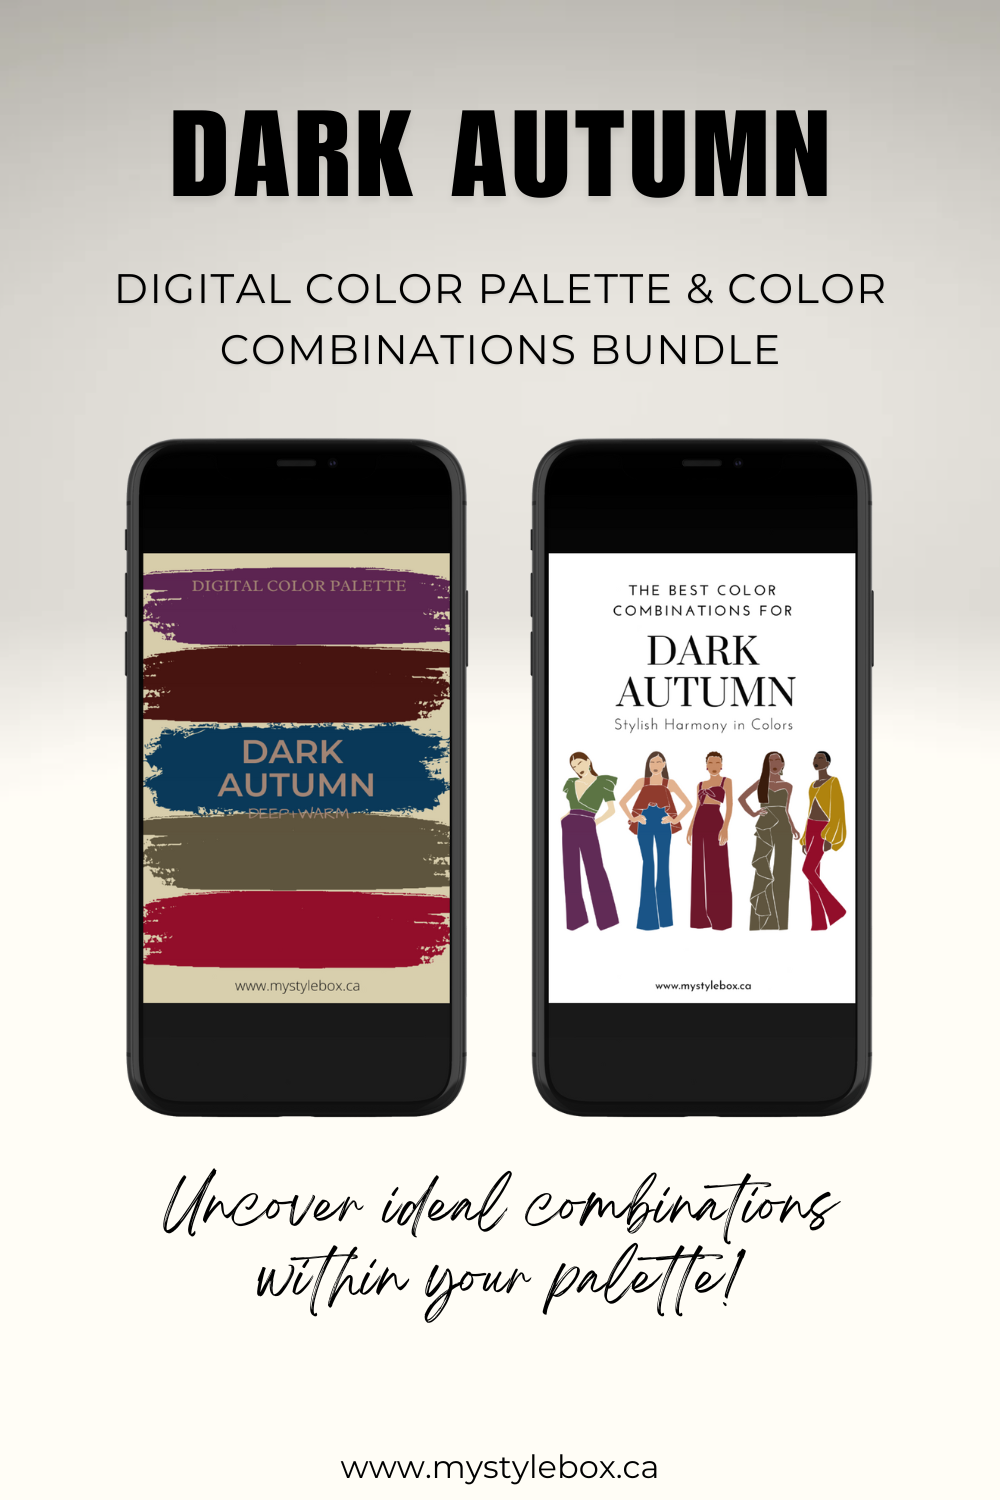 Dark (Deep) Autumn Digital Color Palette and Color Combinations